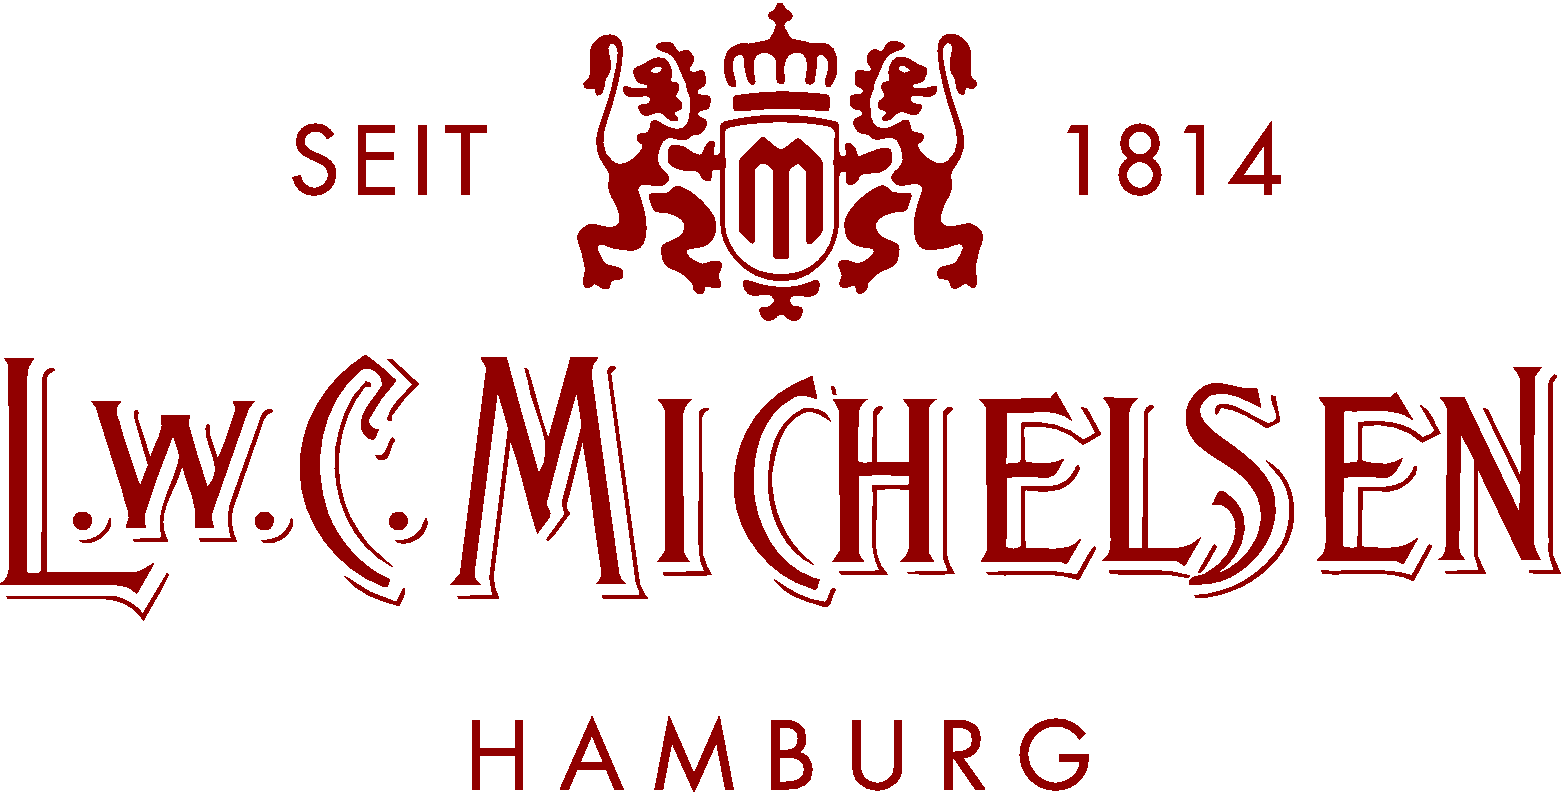 LWC_Michelsen_logo_1